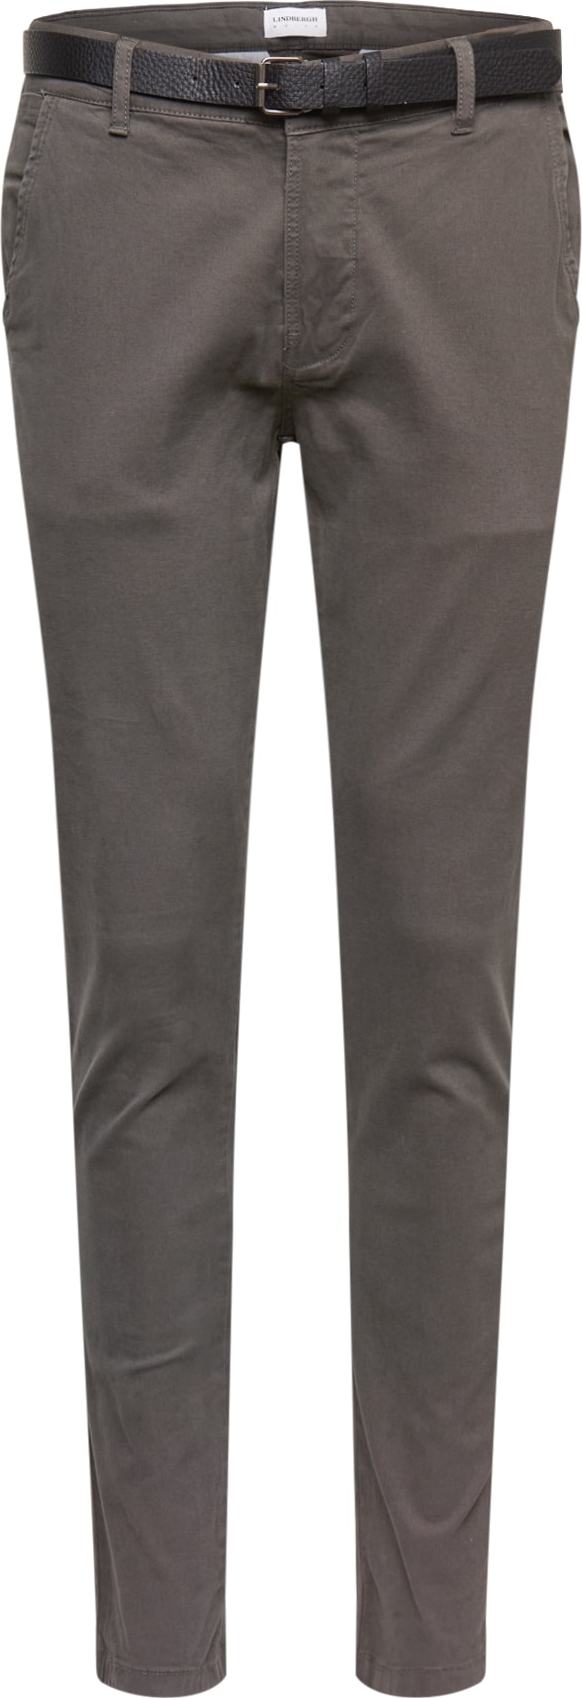 Lindbergh Chino kalhoty khaki